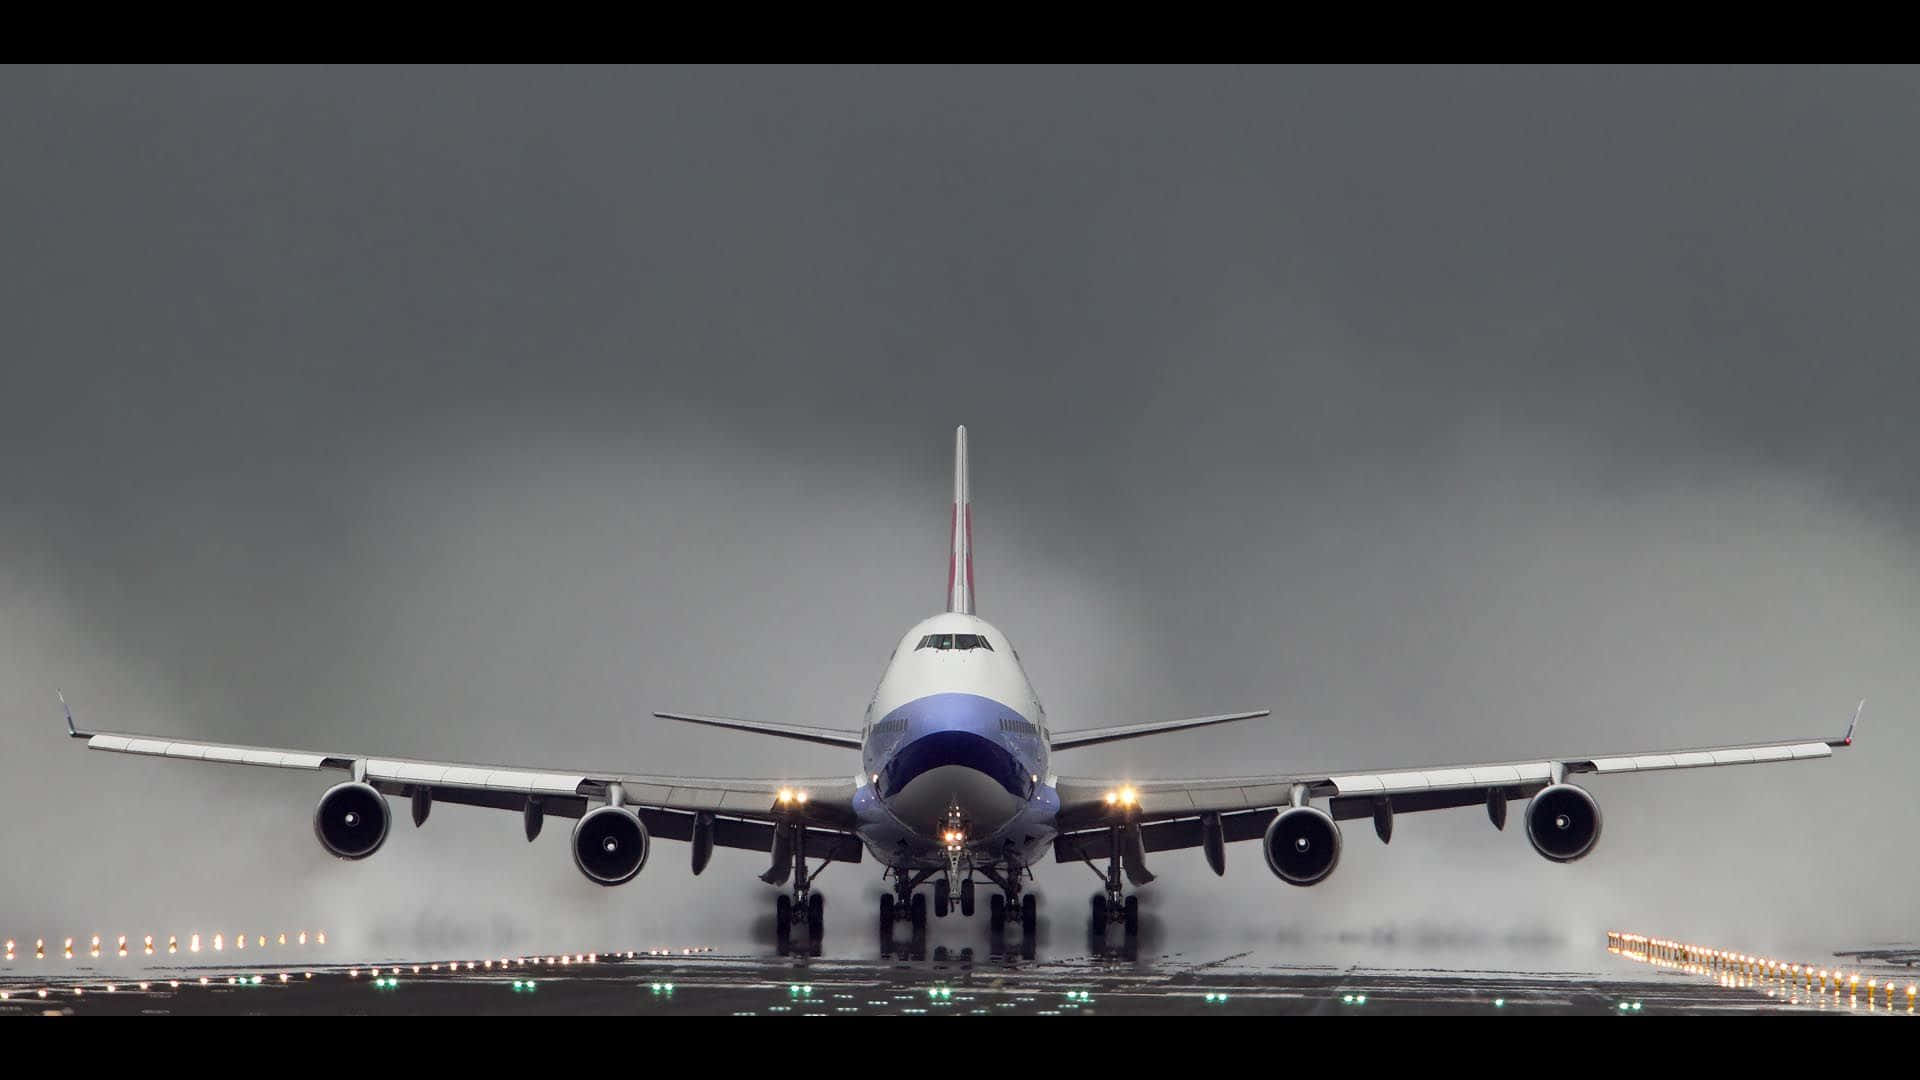 747 Airplane Taking Off Wallpaper